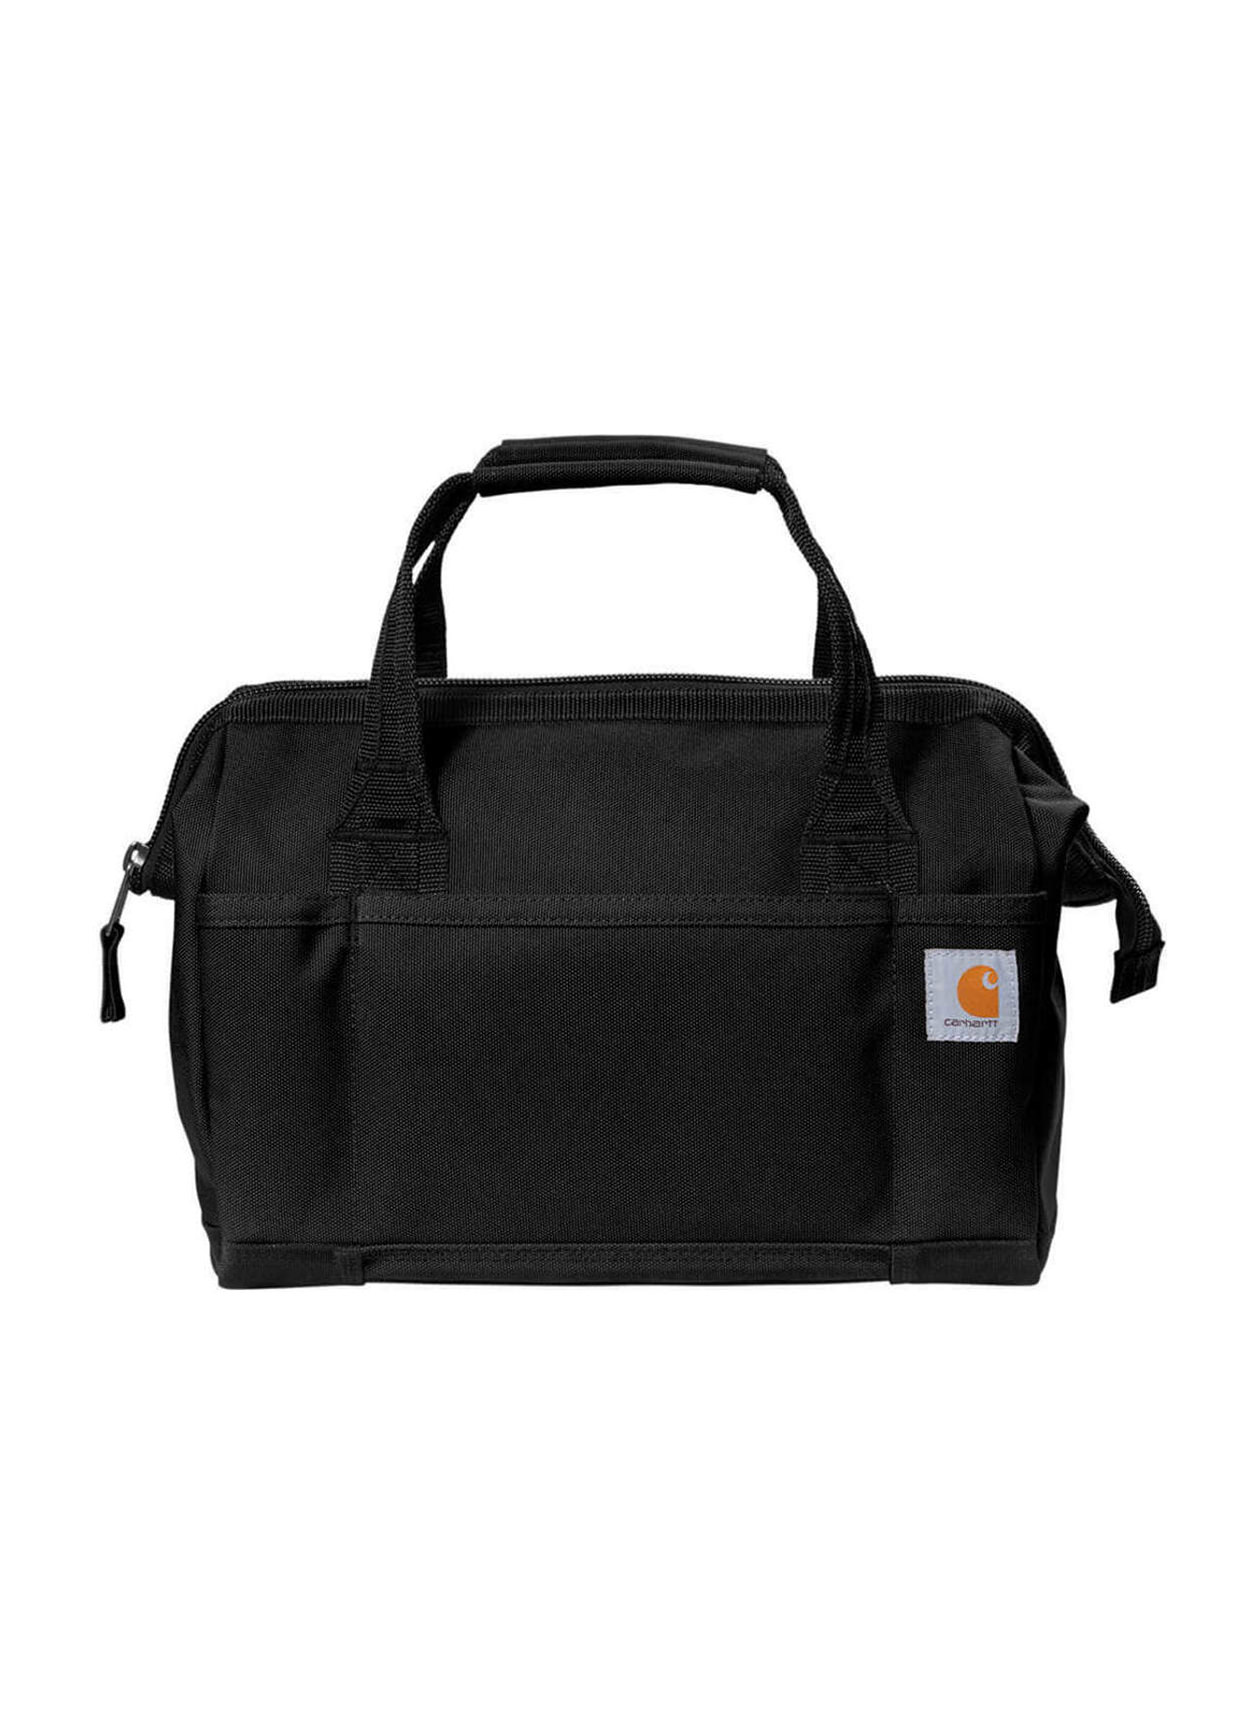 Carhartt Black Foundry Series 14 Tool Bag | Company Bags